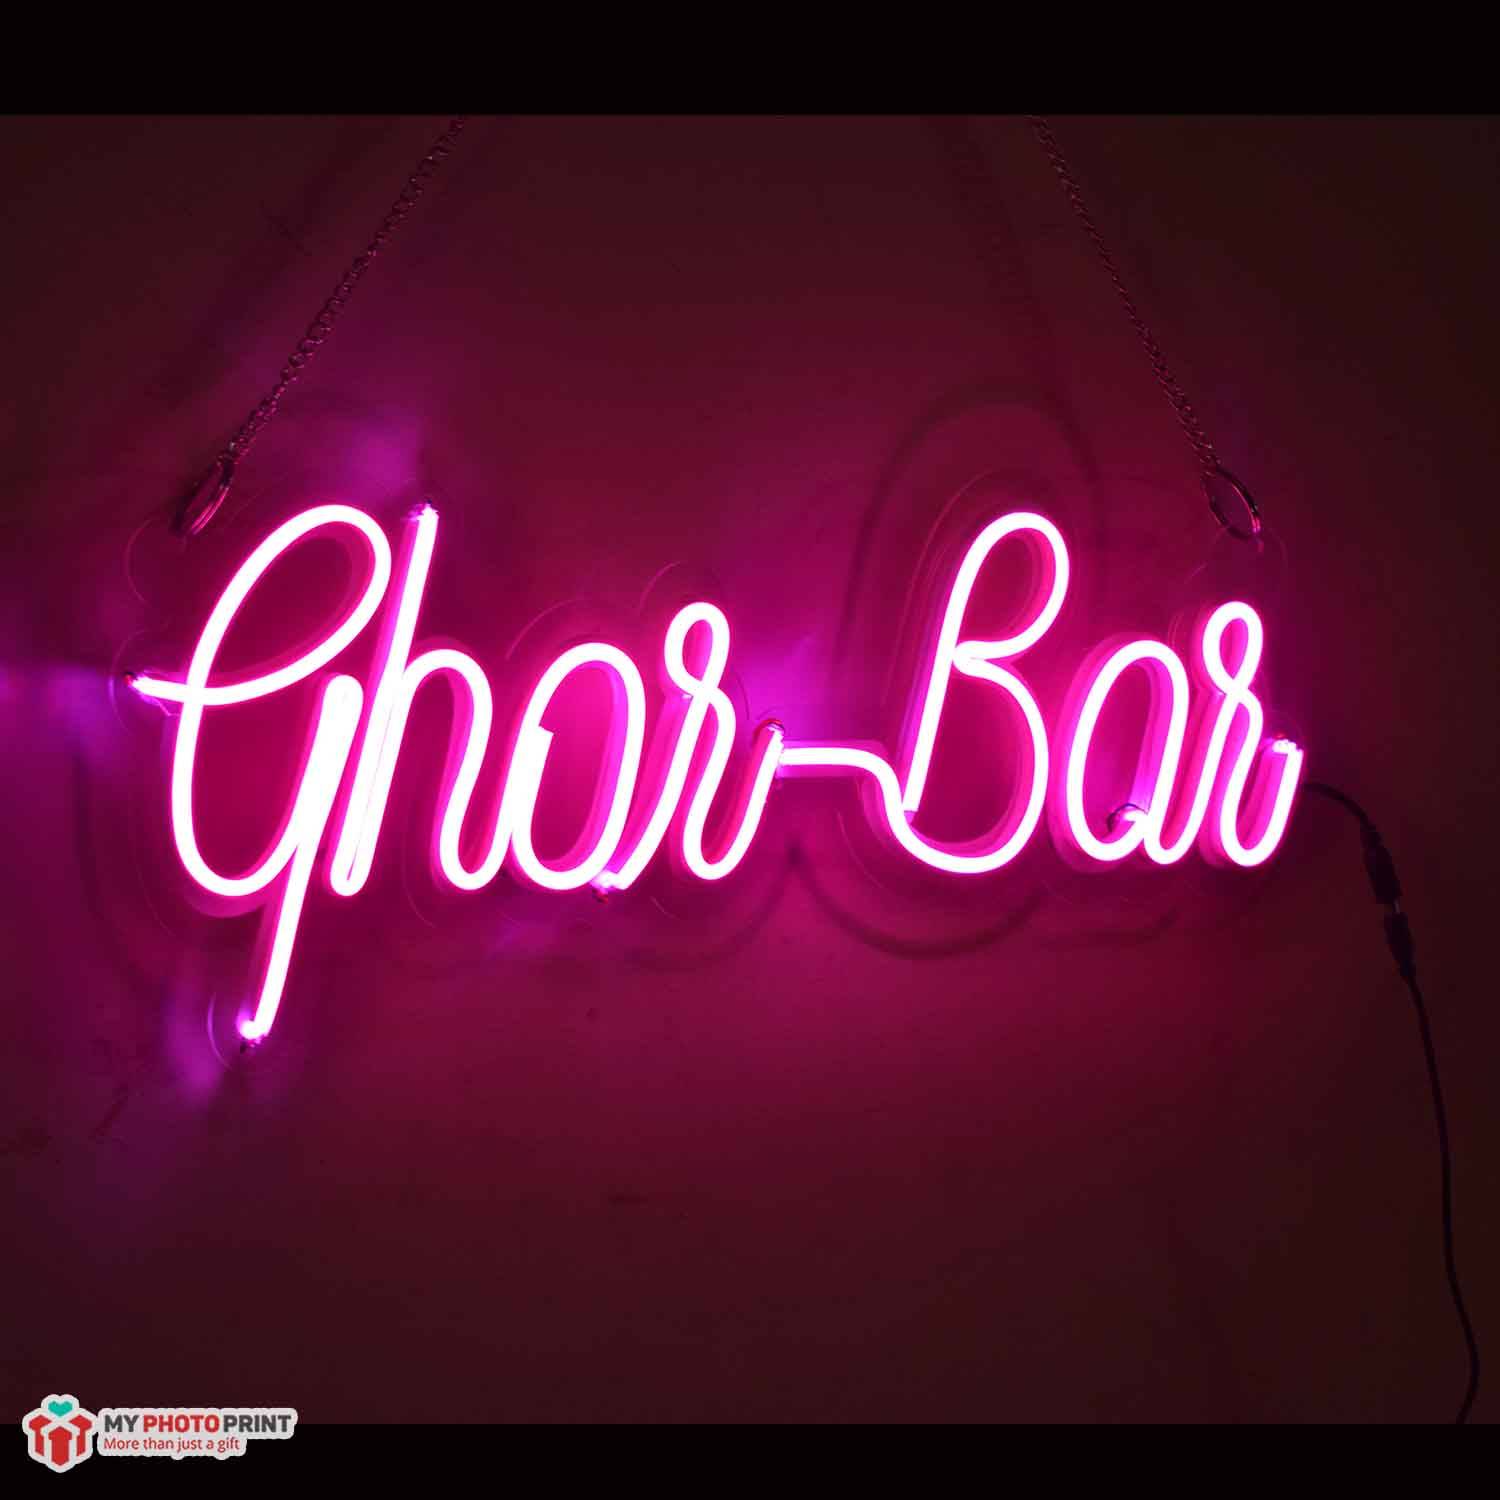 Neon Ghar-Bar Led Neon Sign Decorative Lights Wall Decor